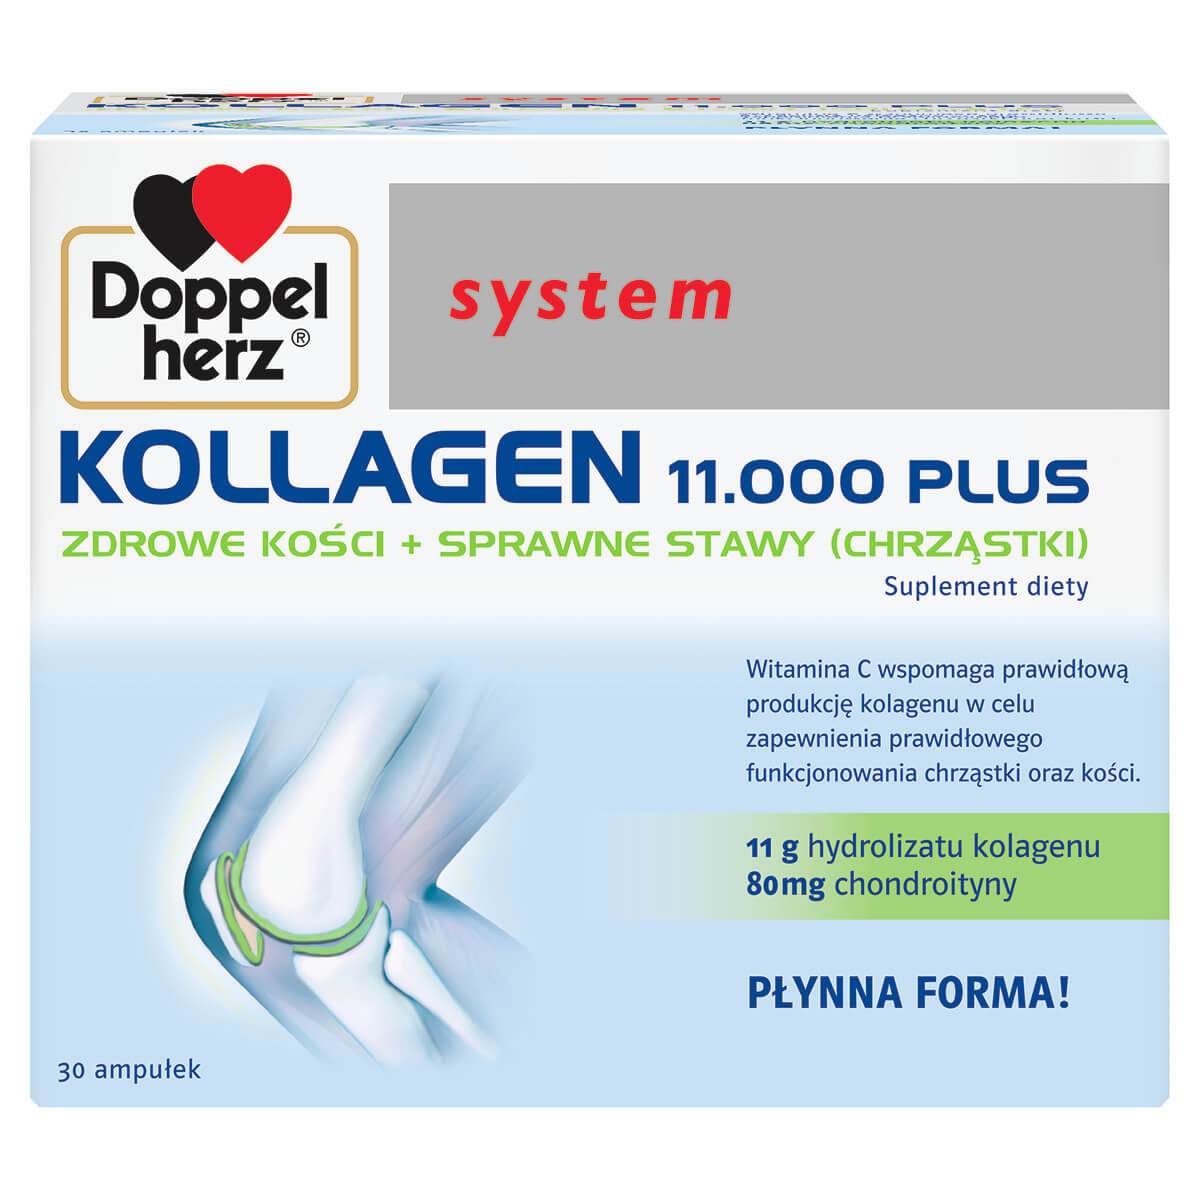 Doppelherz system Kollagen 11.000